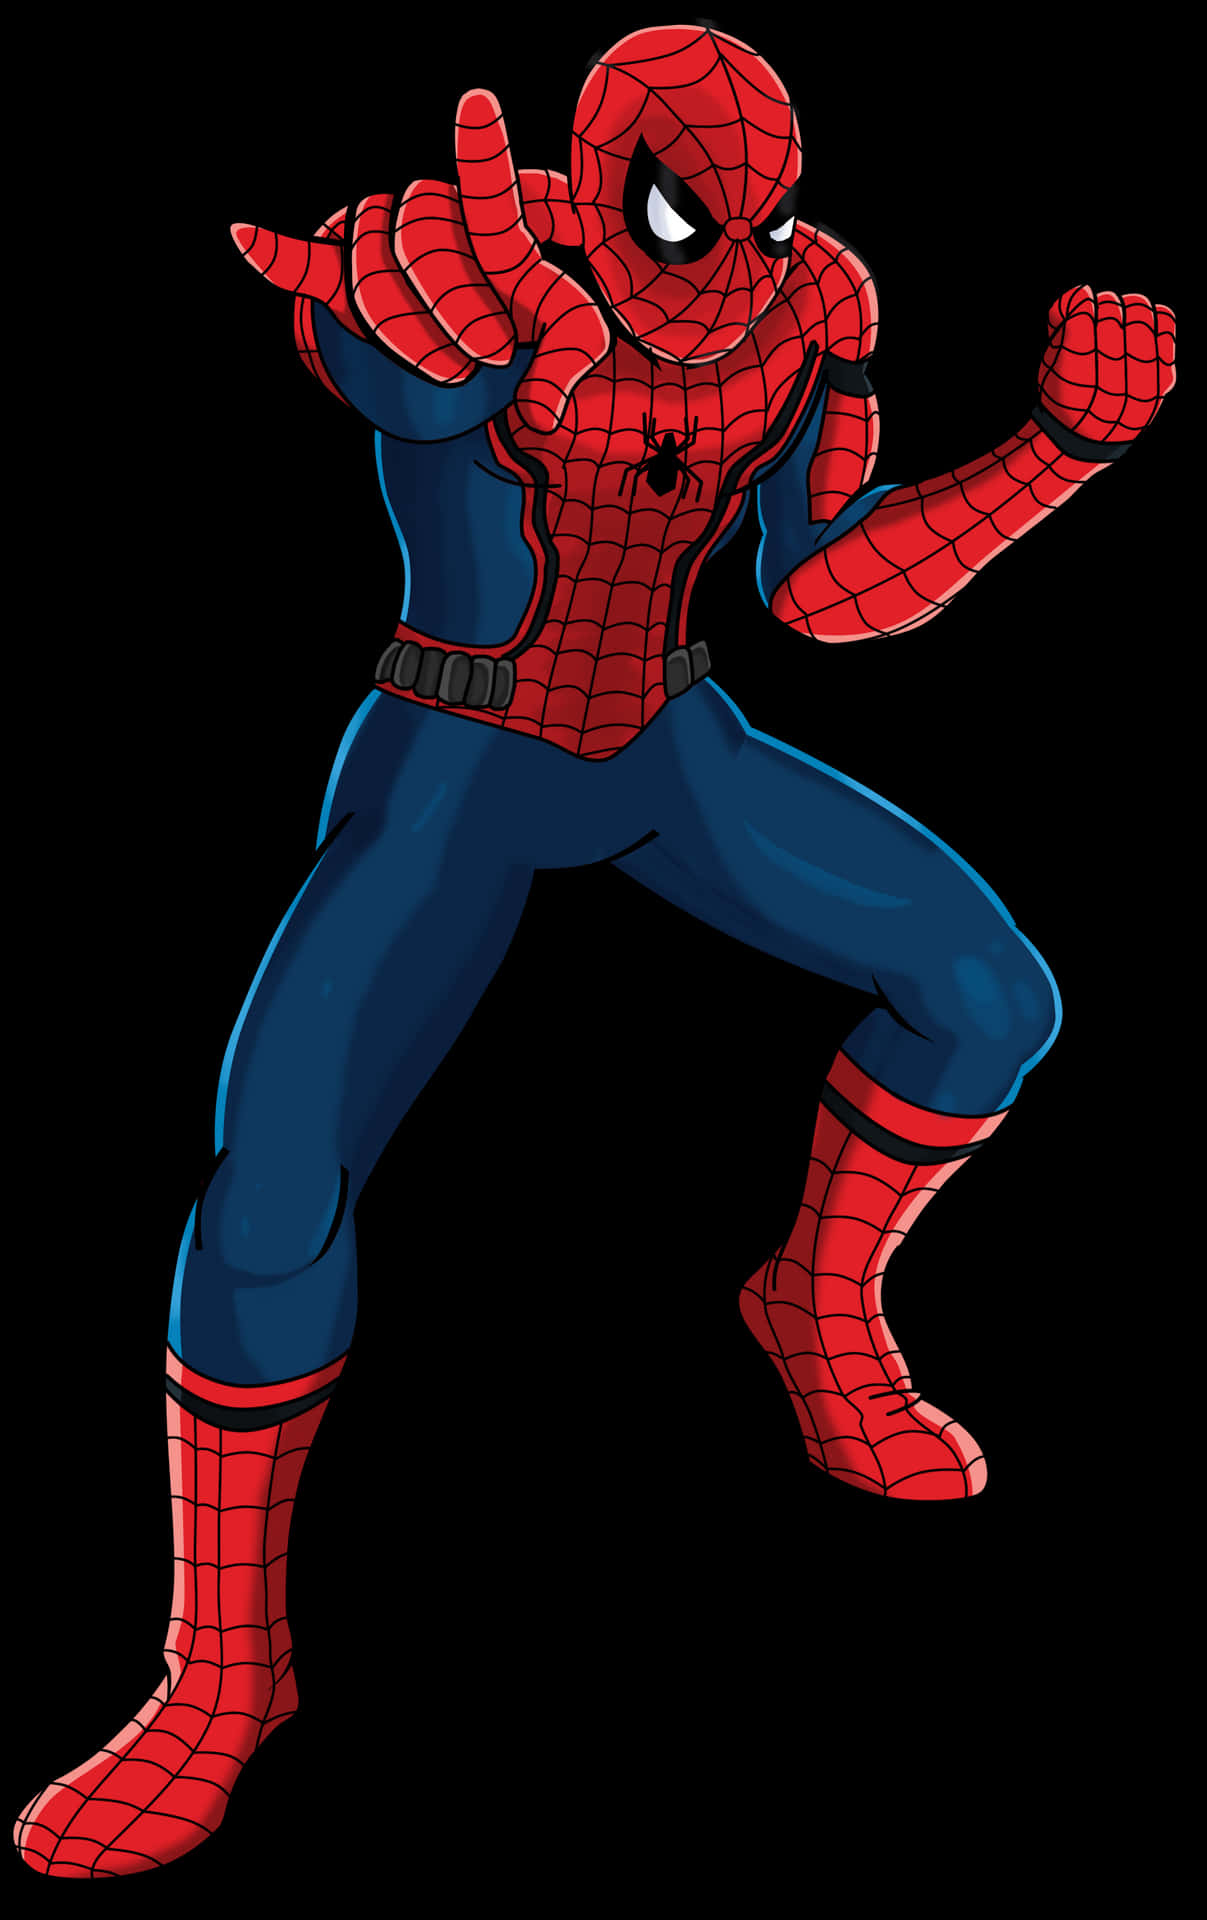 Tom Holland Shares Spider-Man Mask PSA | Teen Vogue